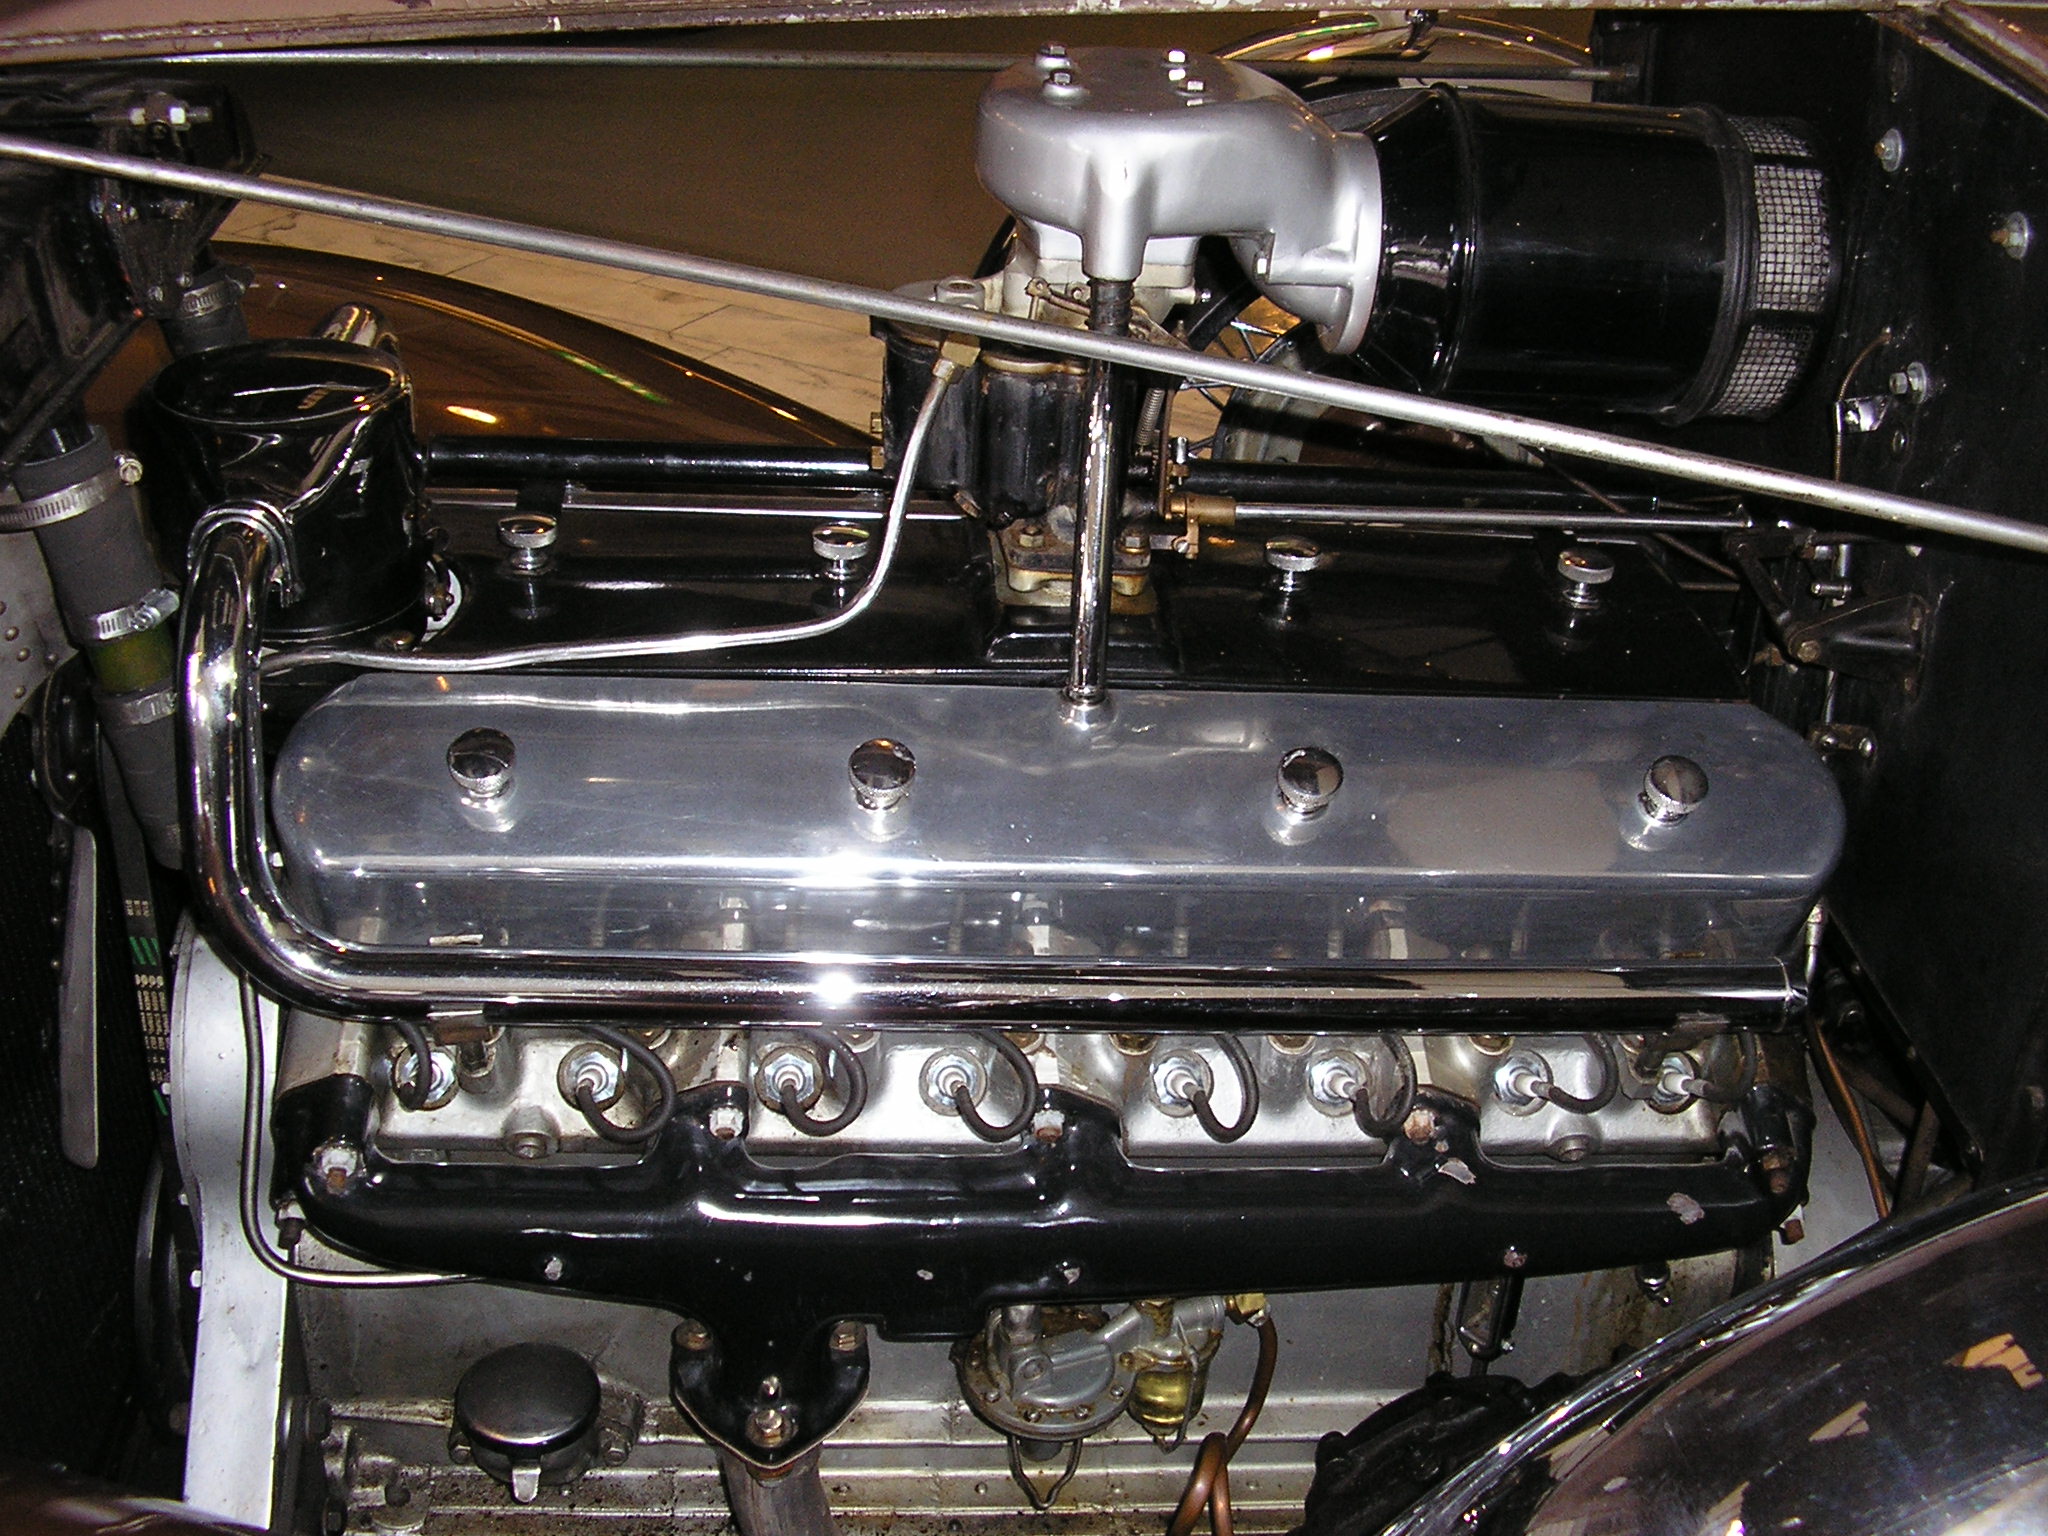 File:1933MarmonV16-engine.jpg - Wikimedia Commons